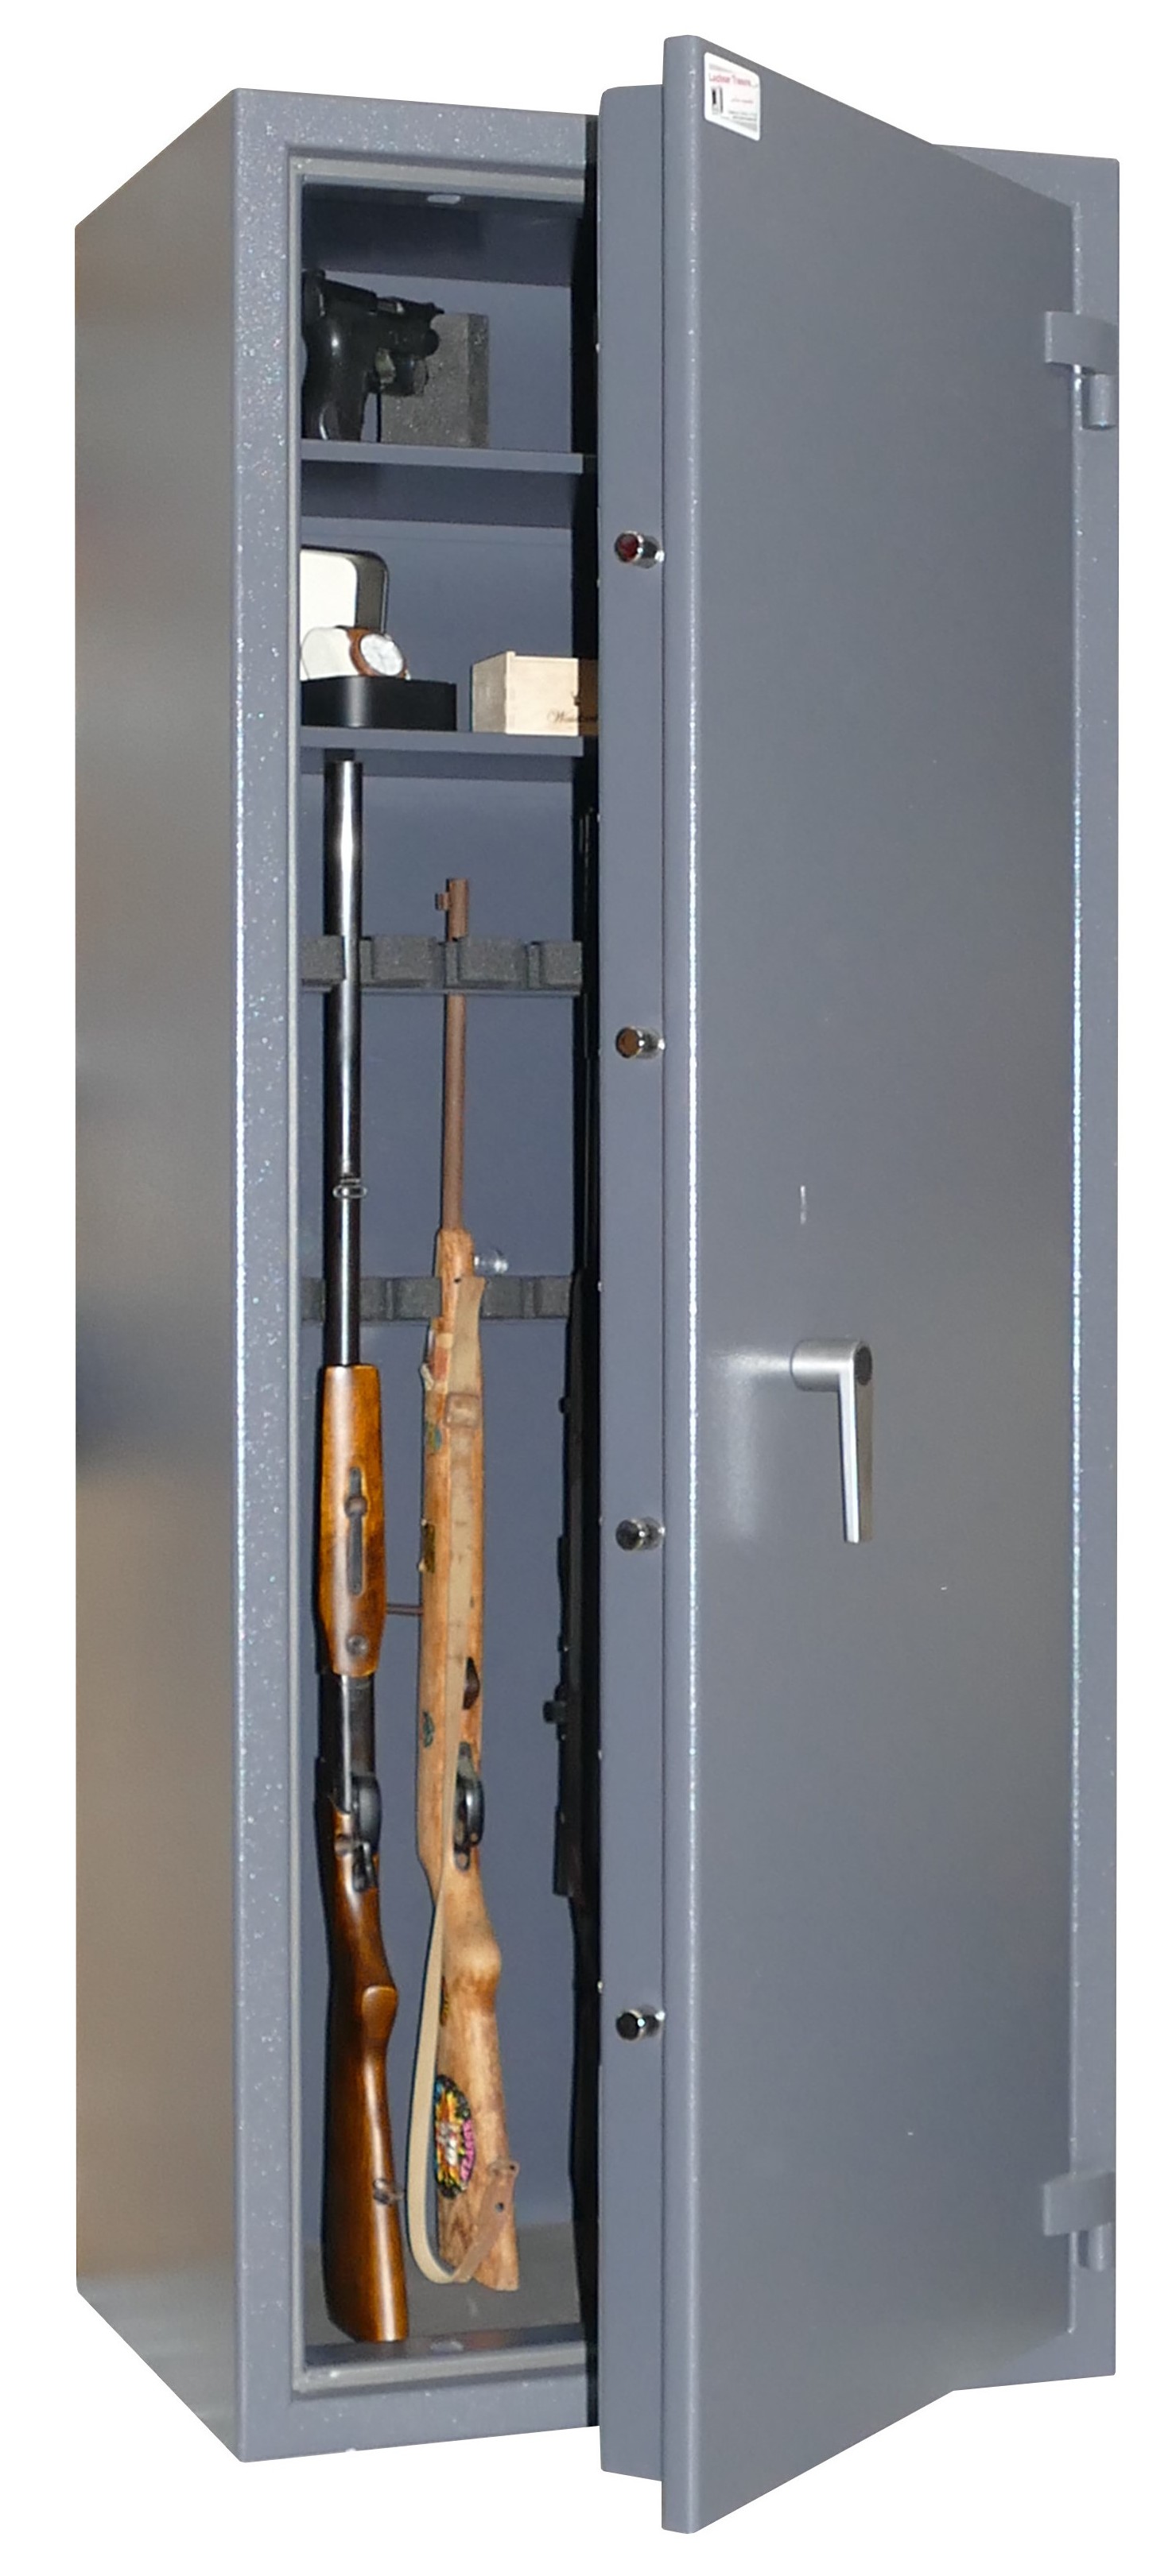 Waffenschrank Gun-Home - Klasse EN 1 nach EN 1143-1